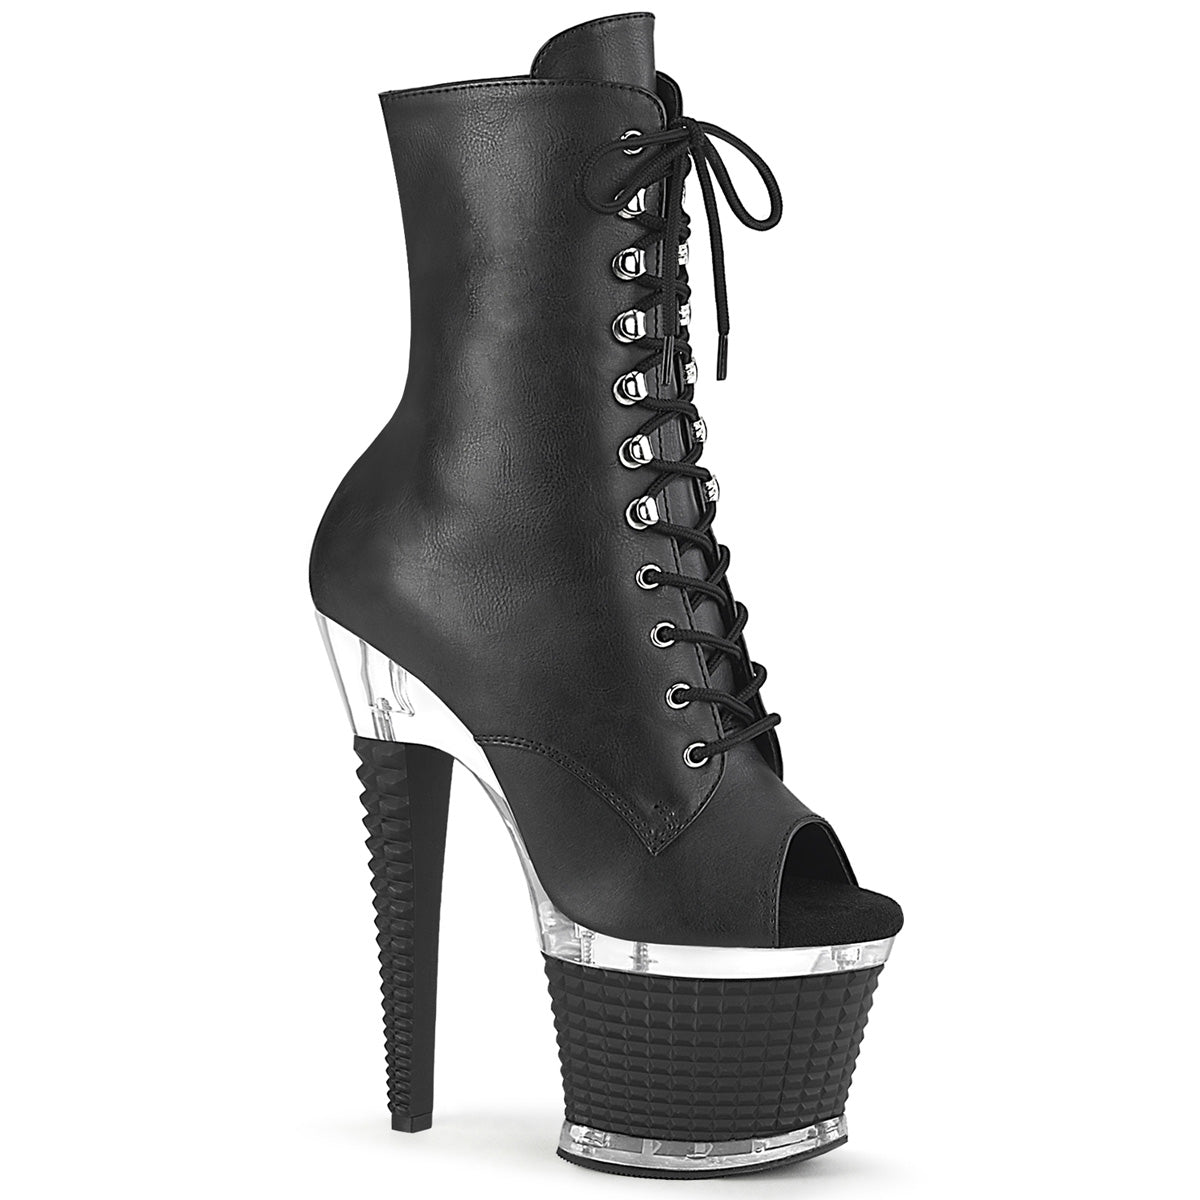 Boots Open Toe Mid Calf 7 inch heels